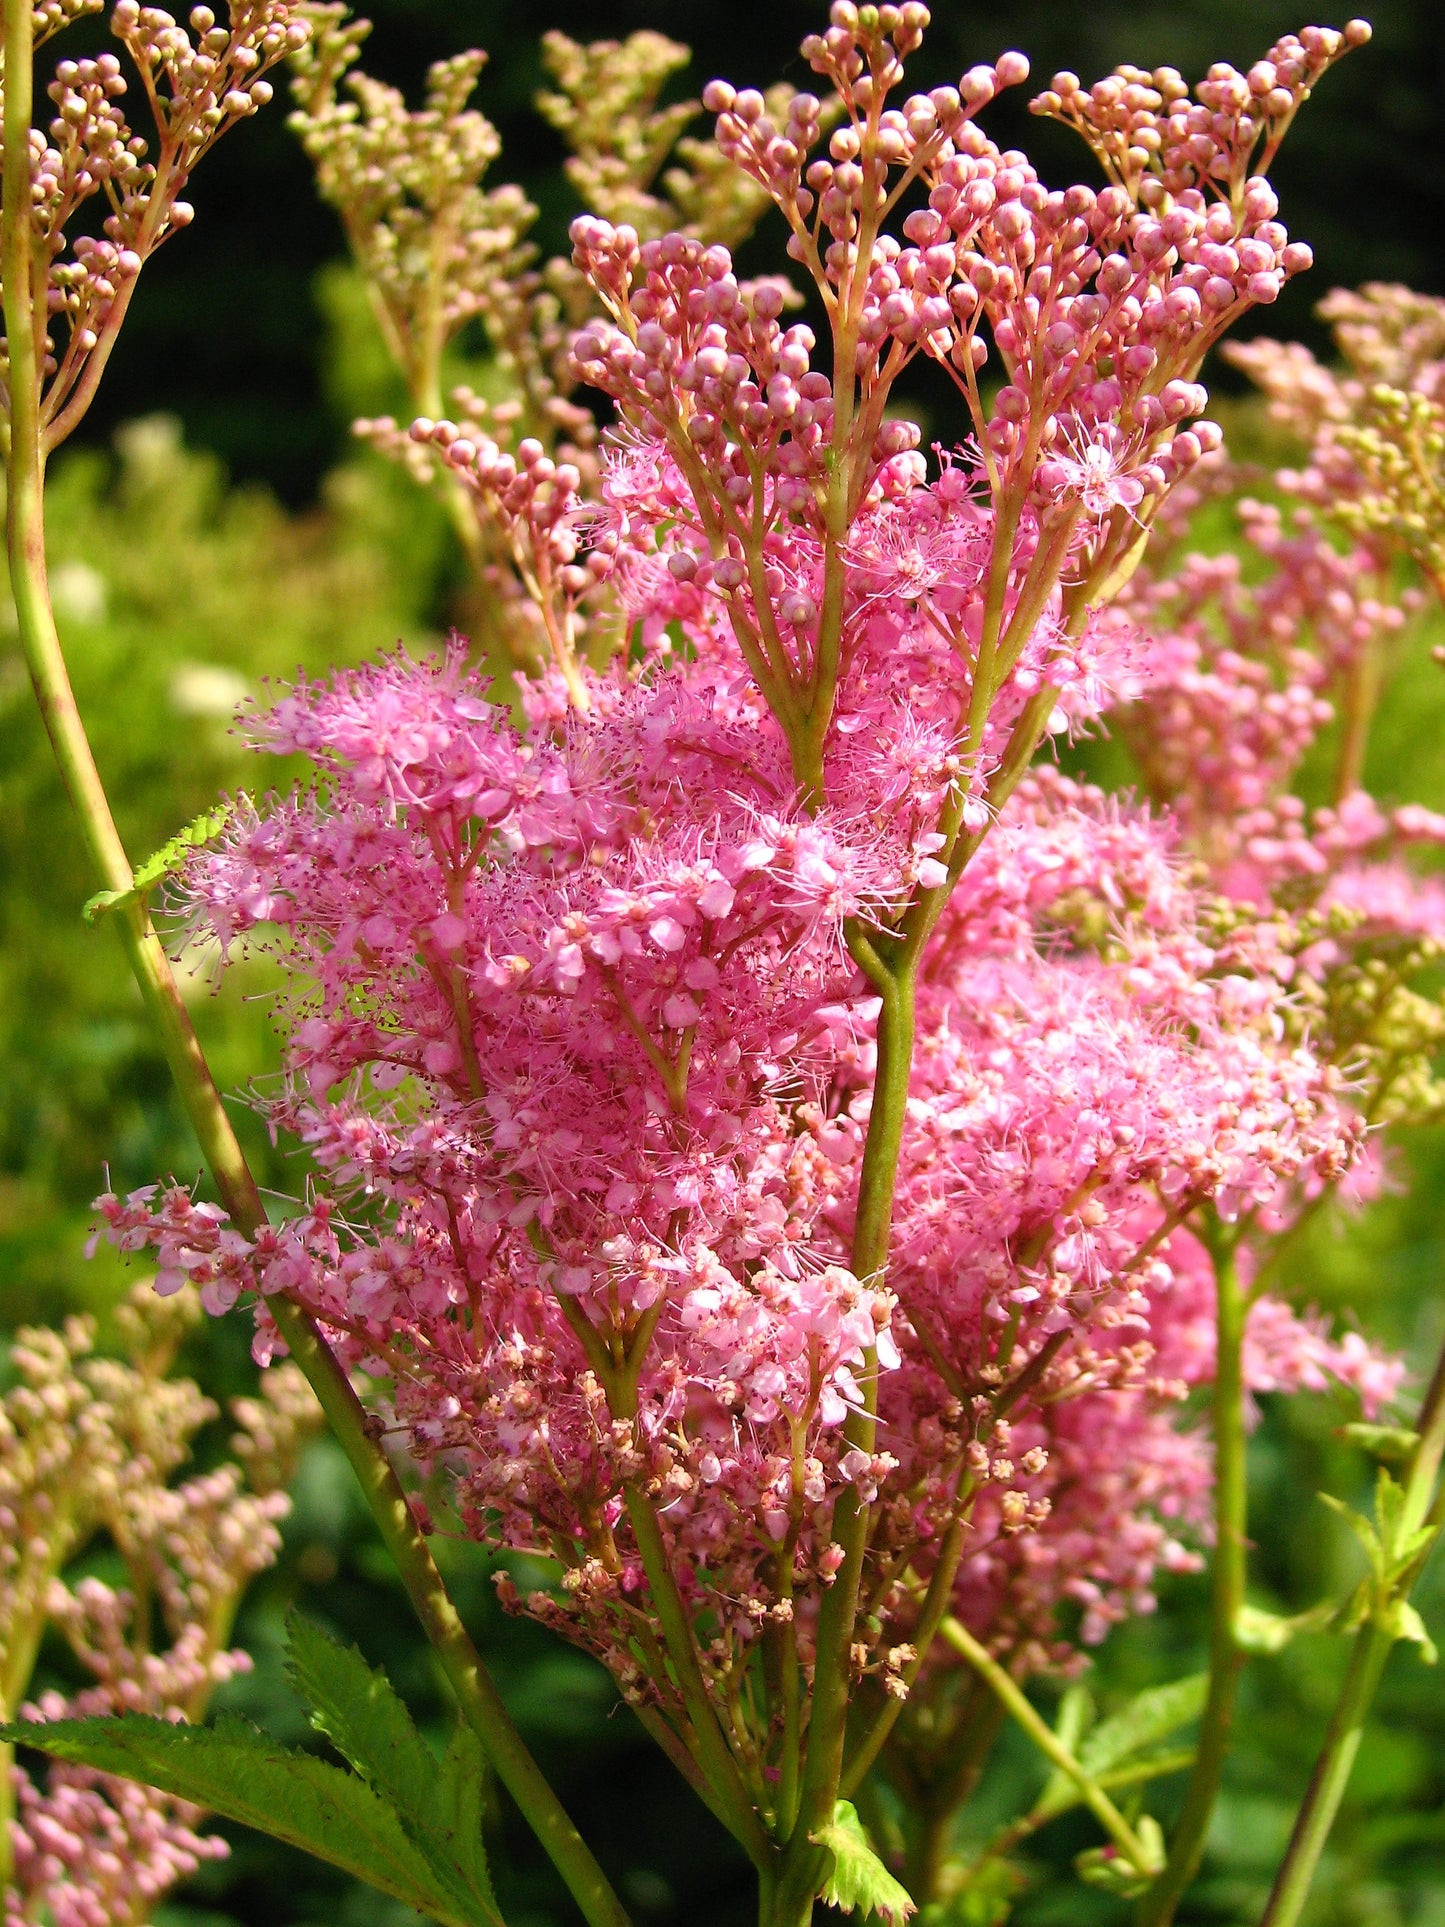 10 QUEEN Of THE PRAIRIE Pink Meadowsweet Filipendula Rubra Flower Seeds